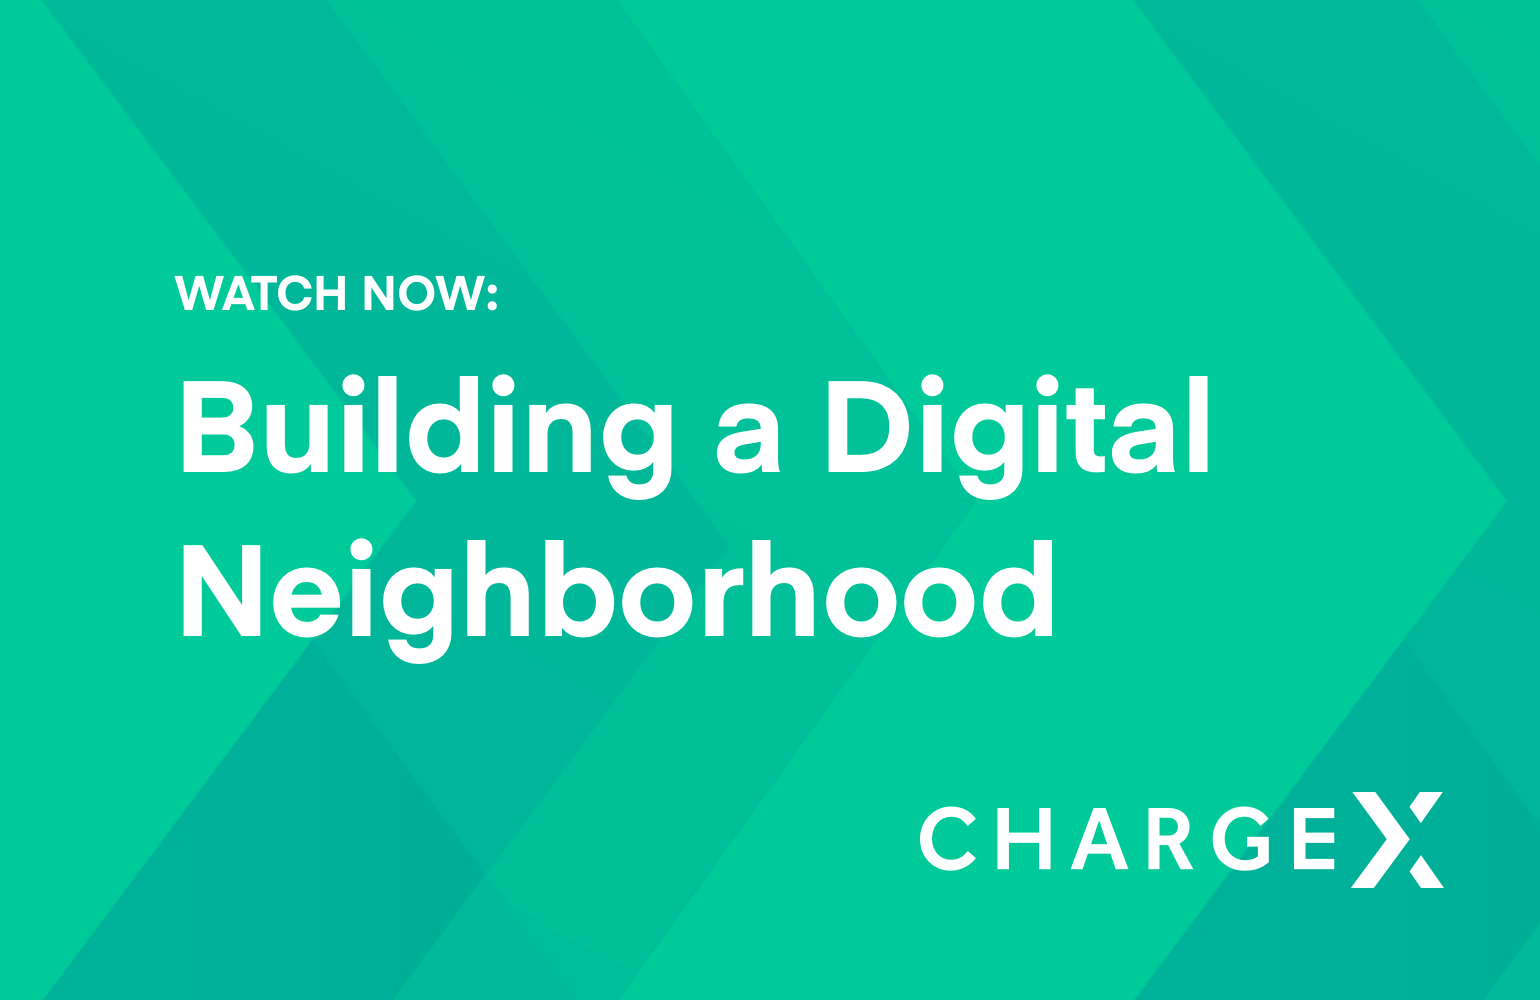 ChargeX: Building a digital neighborhood